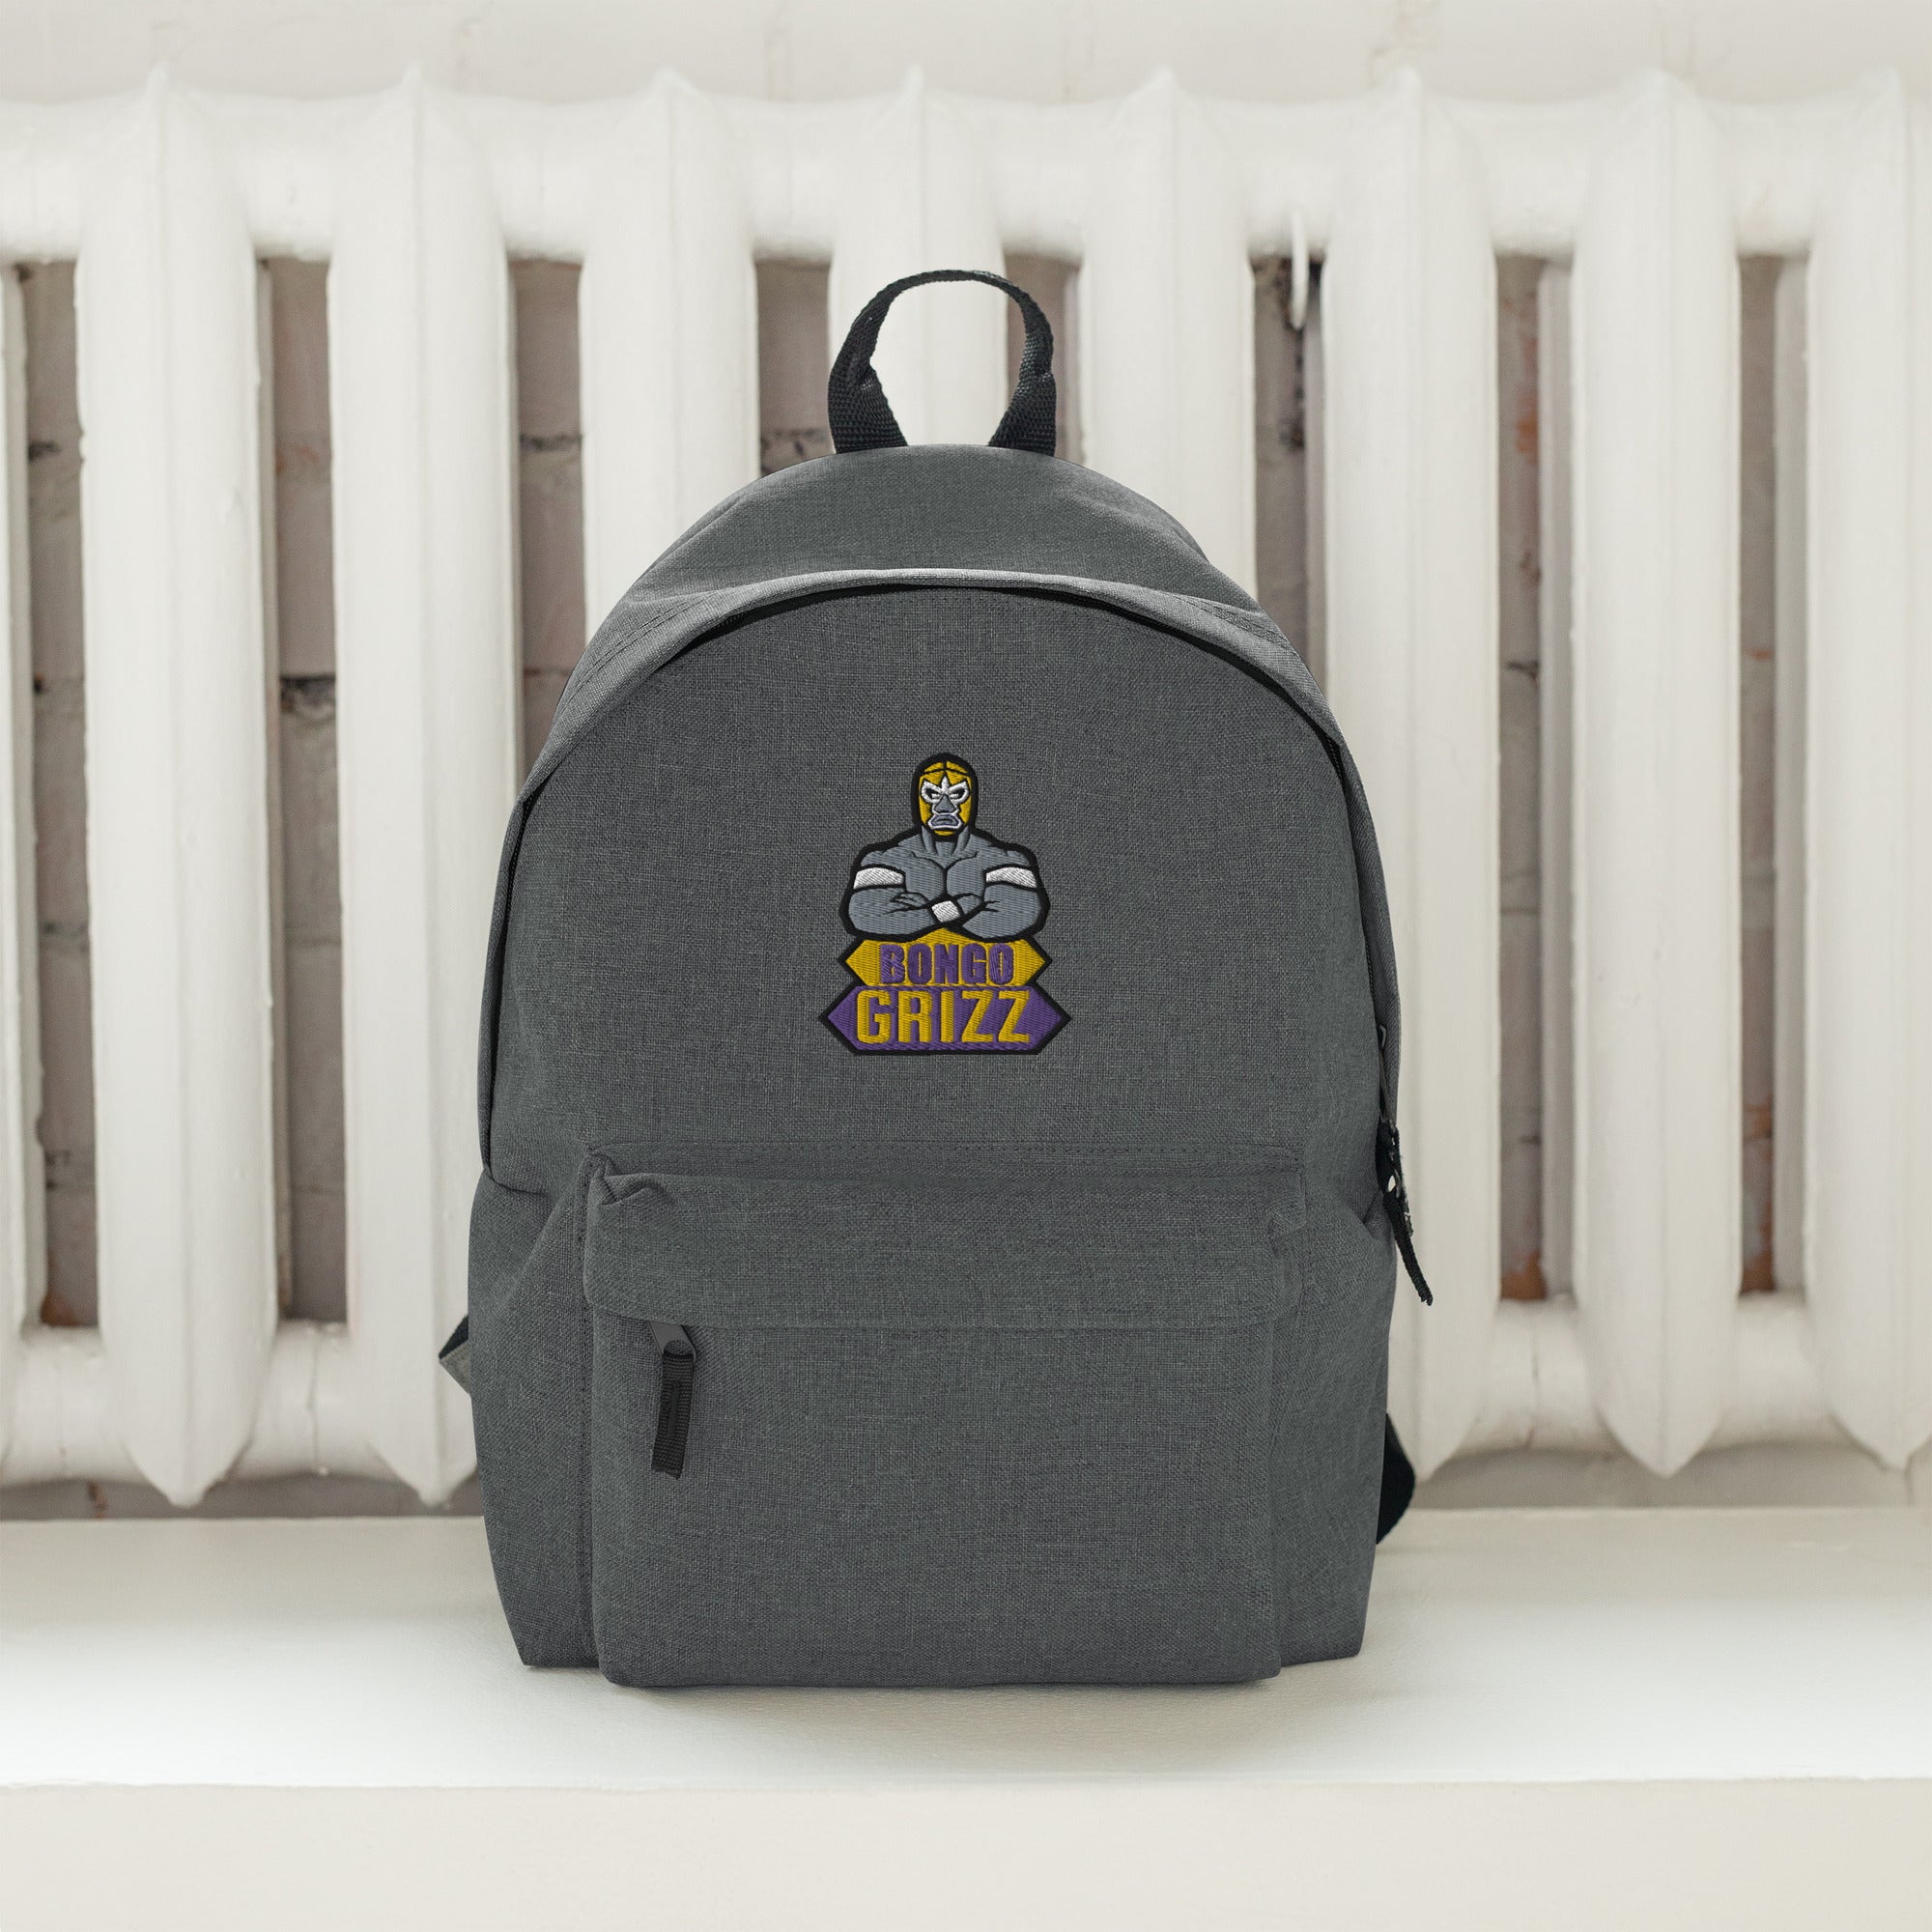 bg2 Embroidered Backpack